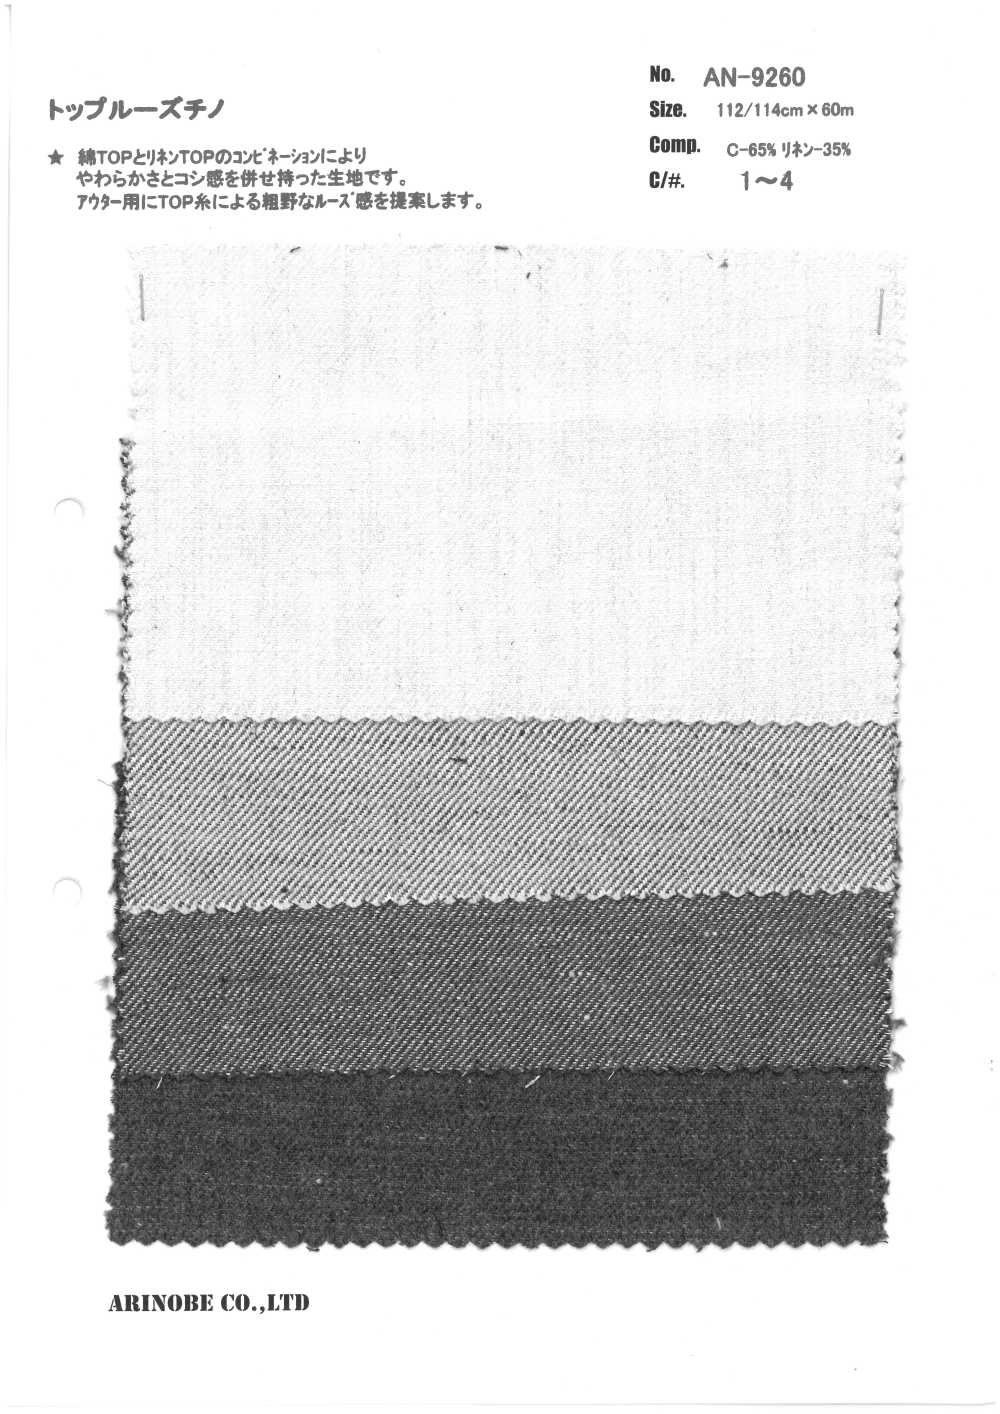 AN-9260 Top Thread Usado Chino Solto[Têxtil / Tecido] ARINOBE CO., LTD.